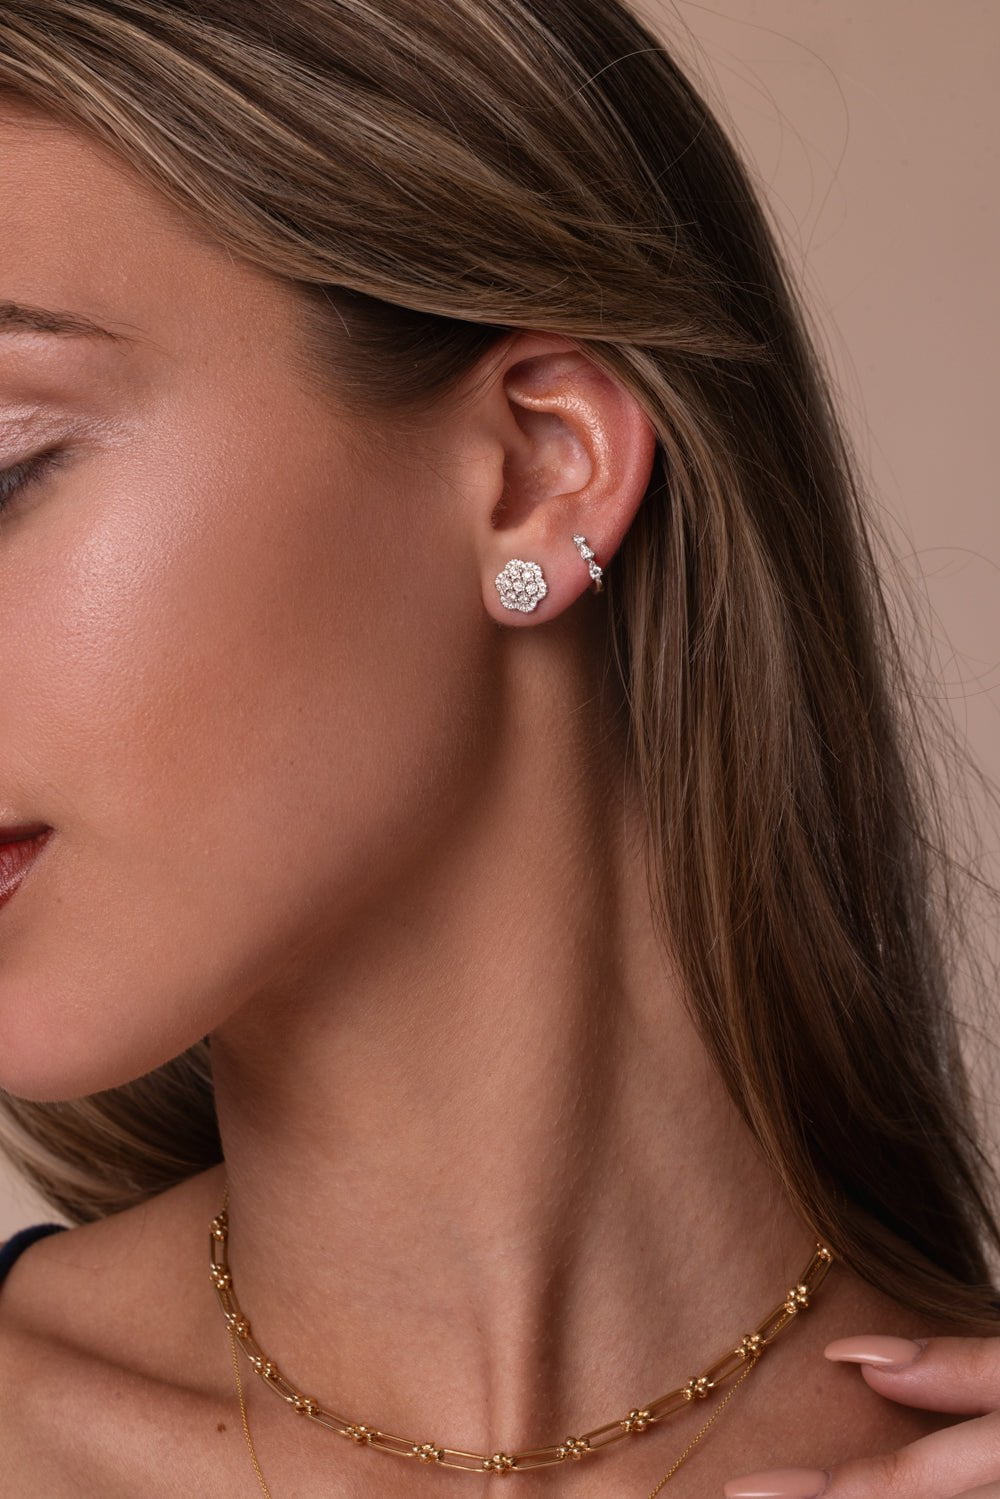 DANA REBECCA DESIGNS-Sophia Ryan Teardrop Mini Huggie Earrings-WHITE GOLD